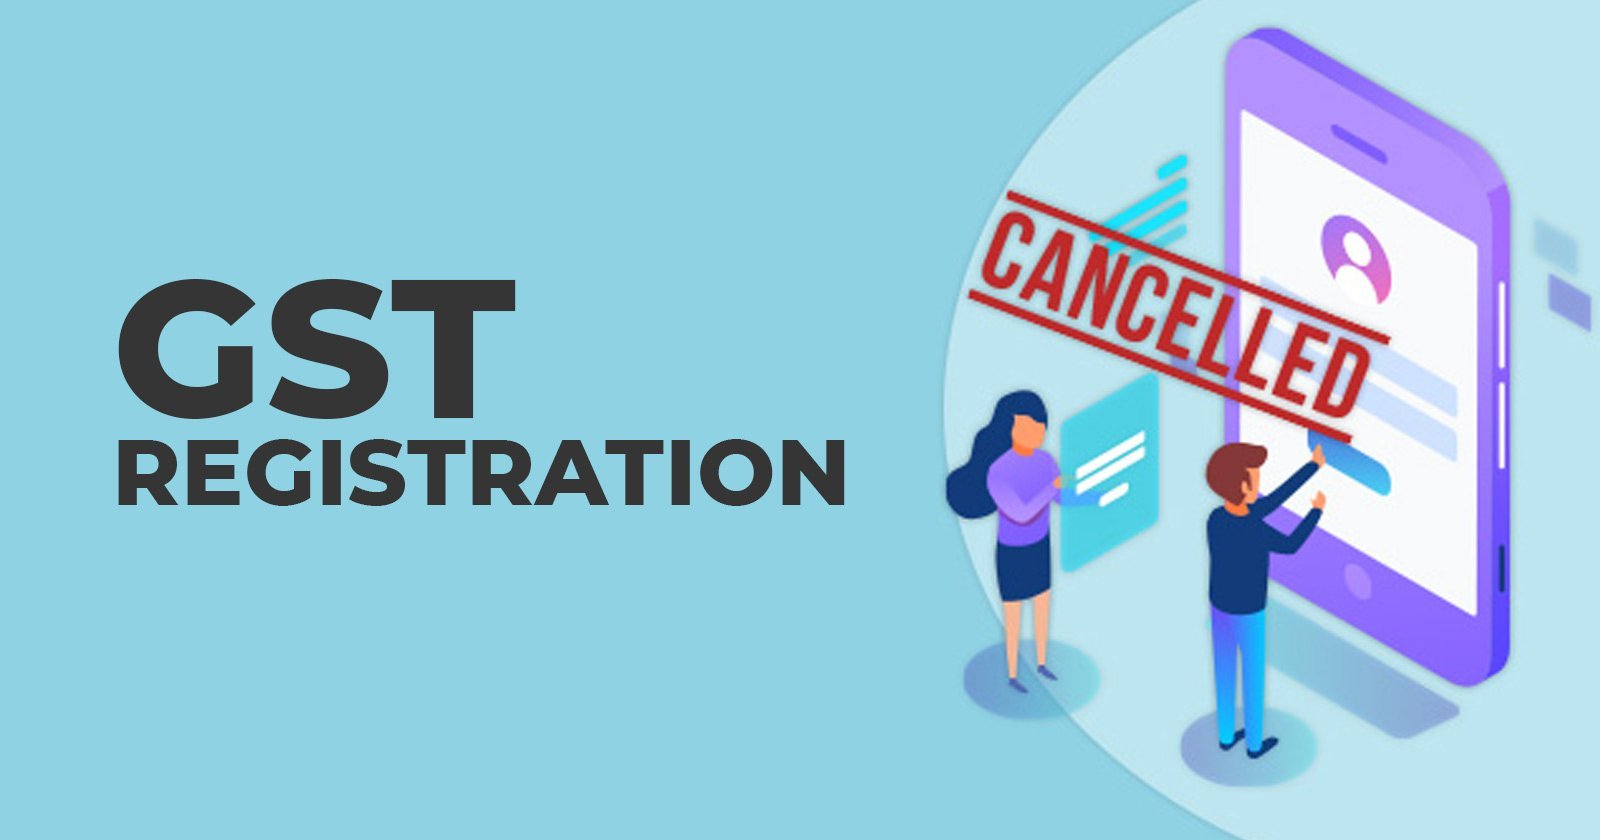 Opportunity to contest Cancellation of GST registration - GST registration - Retrospective Effect - Delhi HC - GST Registration - taxscan